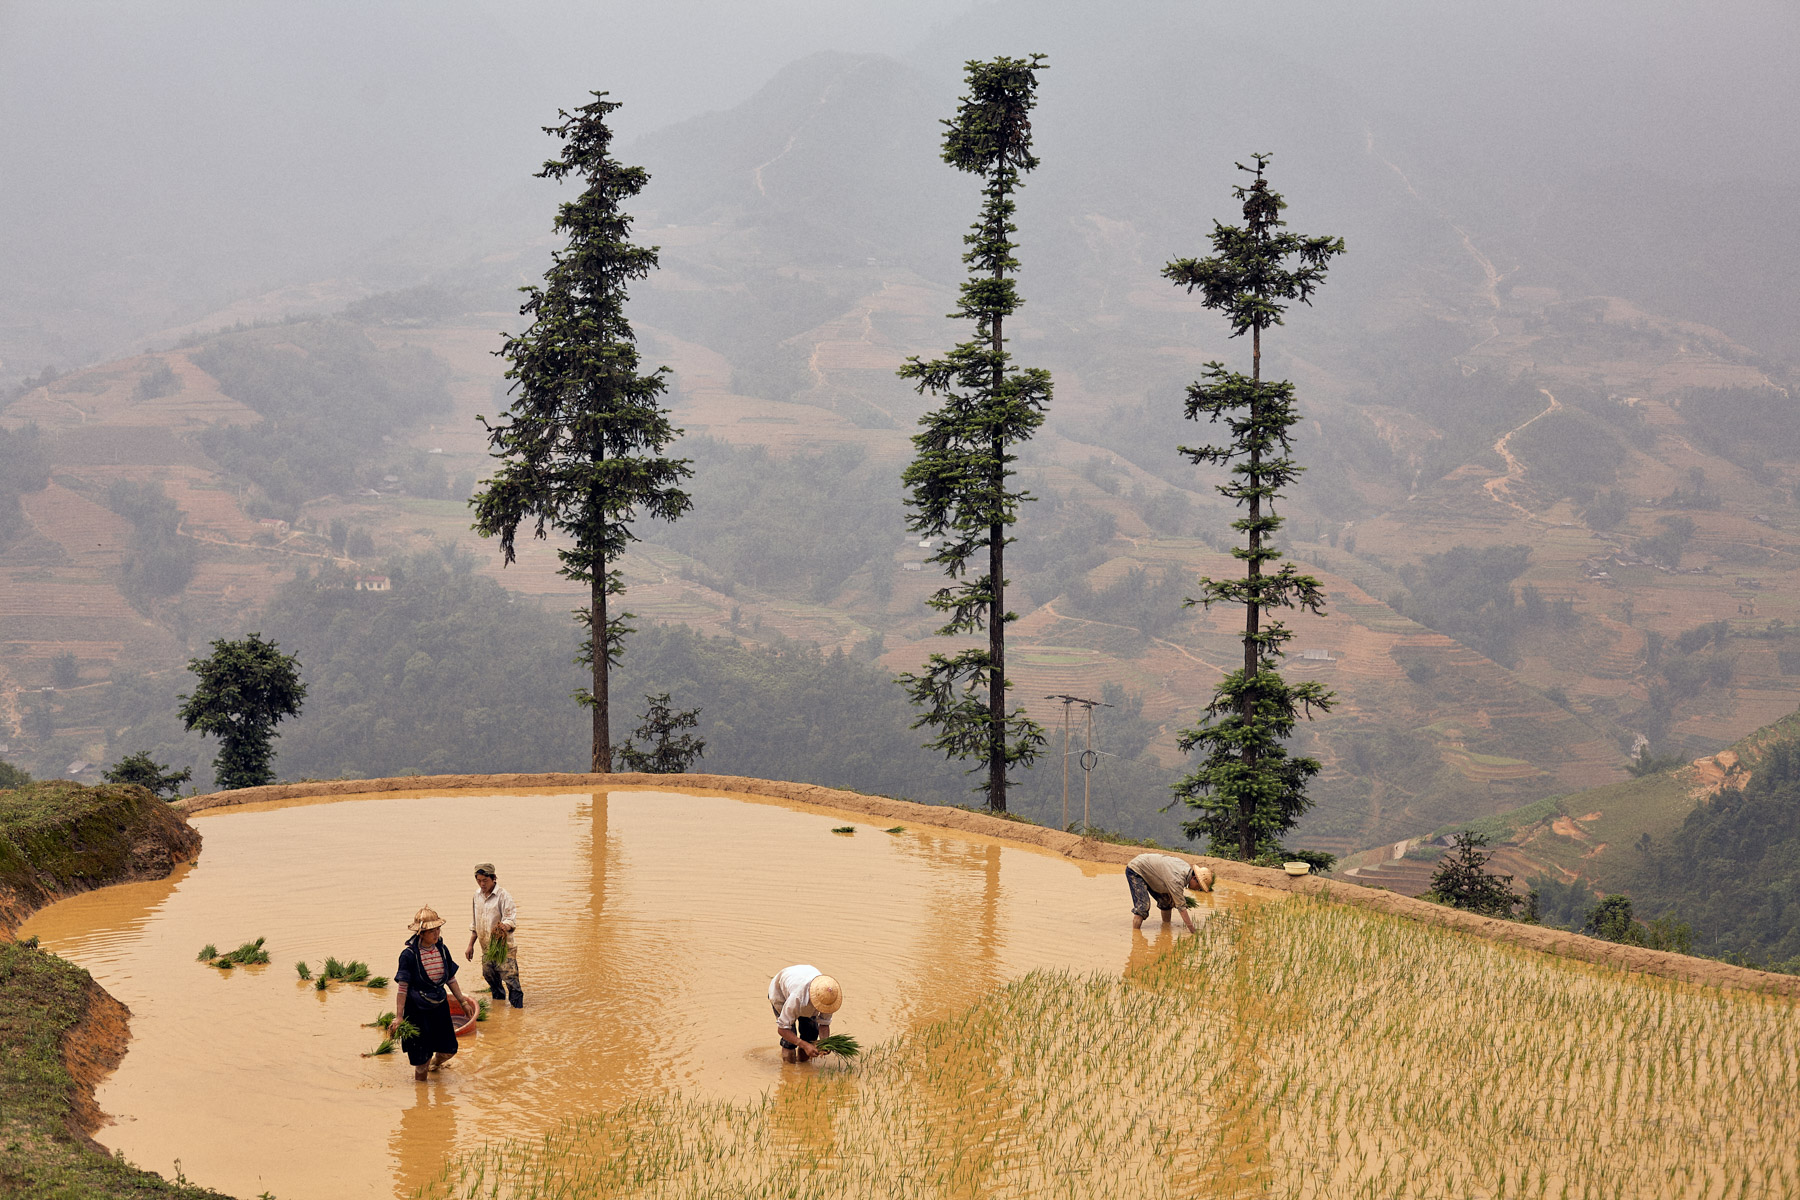 Farmers harvest rice on a mountainside in Sapa, Vietnam.